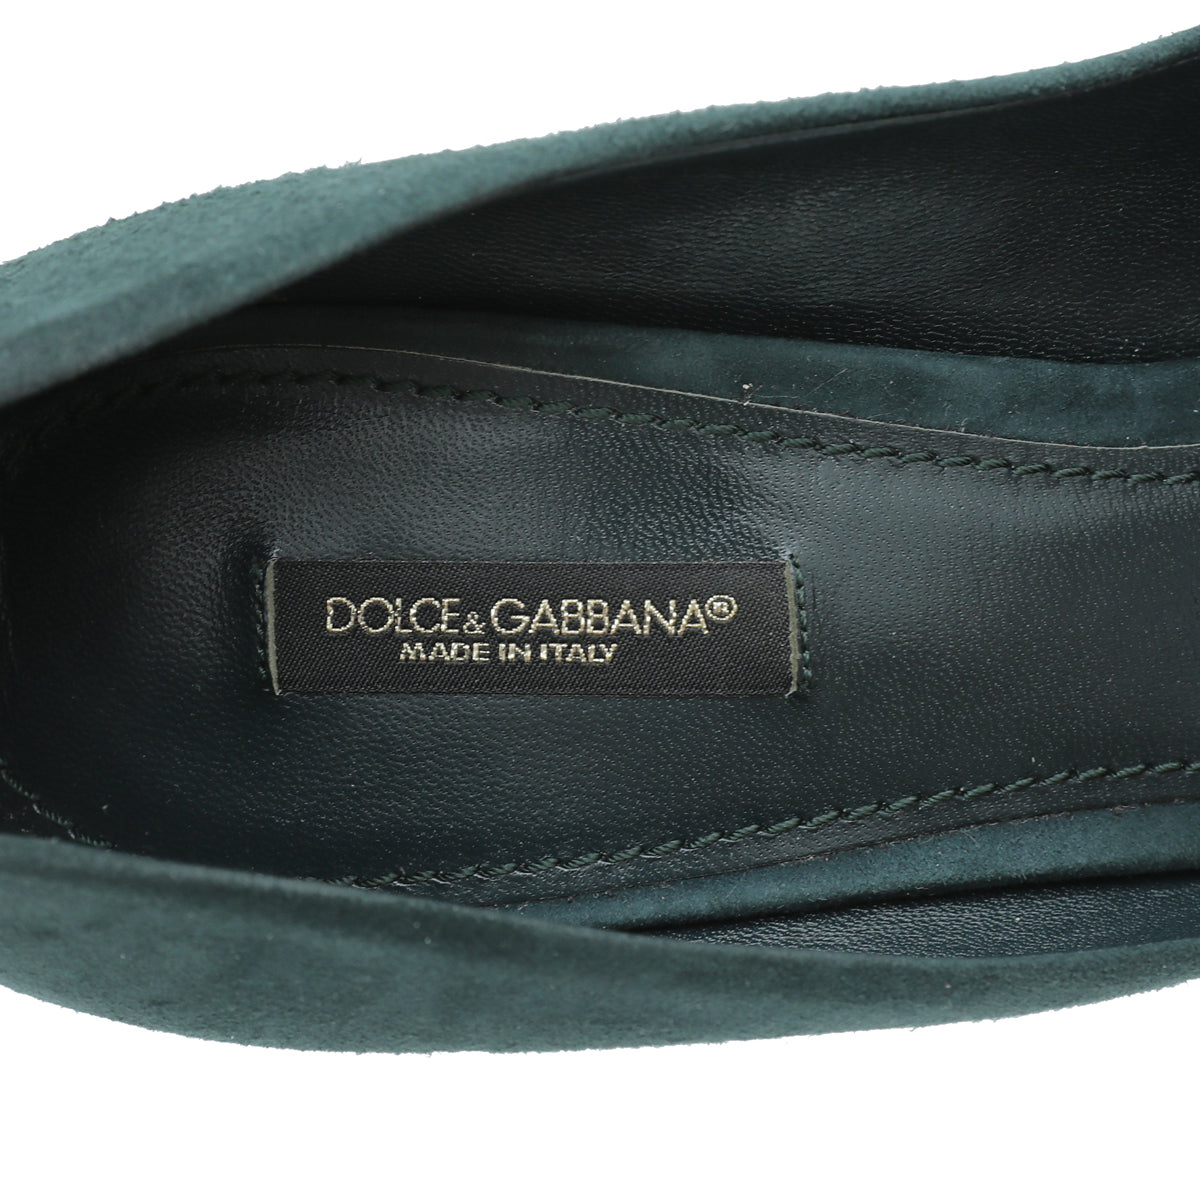 Dolce & Gabbana Emerald Green Suede Bellucci Crystal Pump 39.5